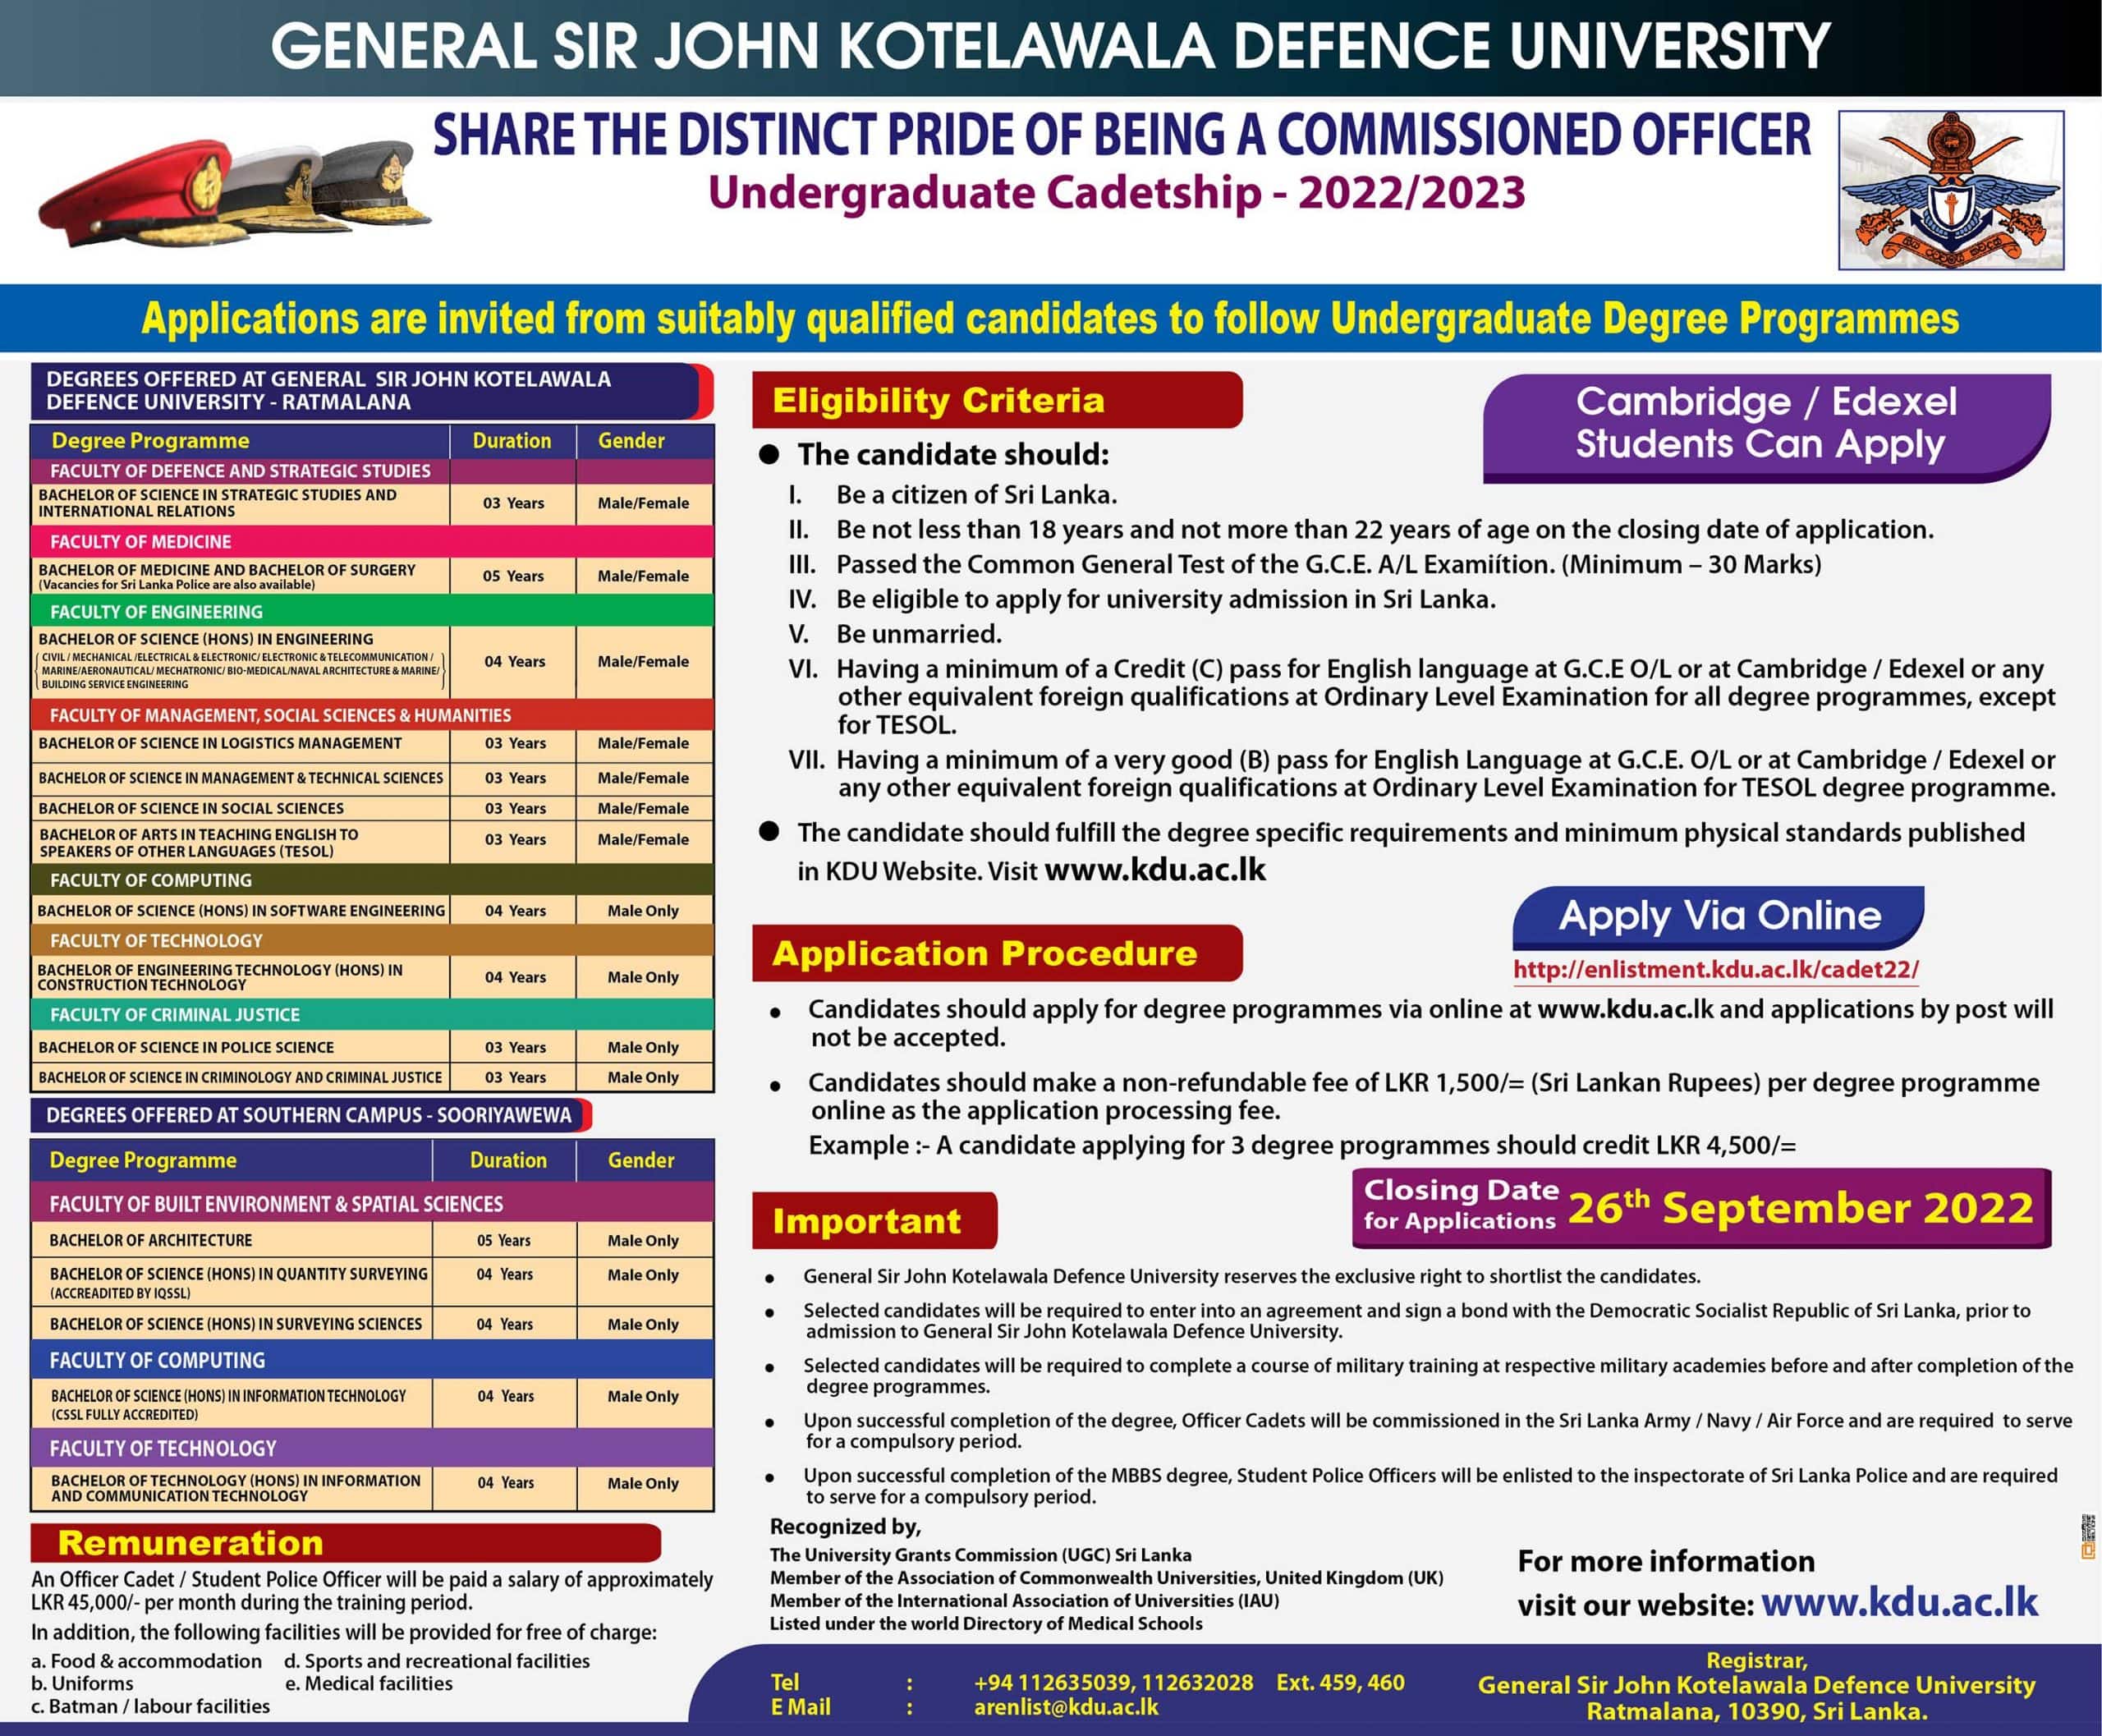 KDU University Undergraduate Cadetship 2022 Application